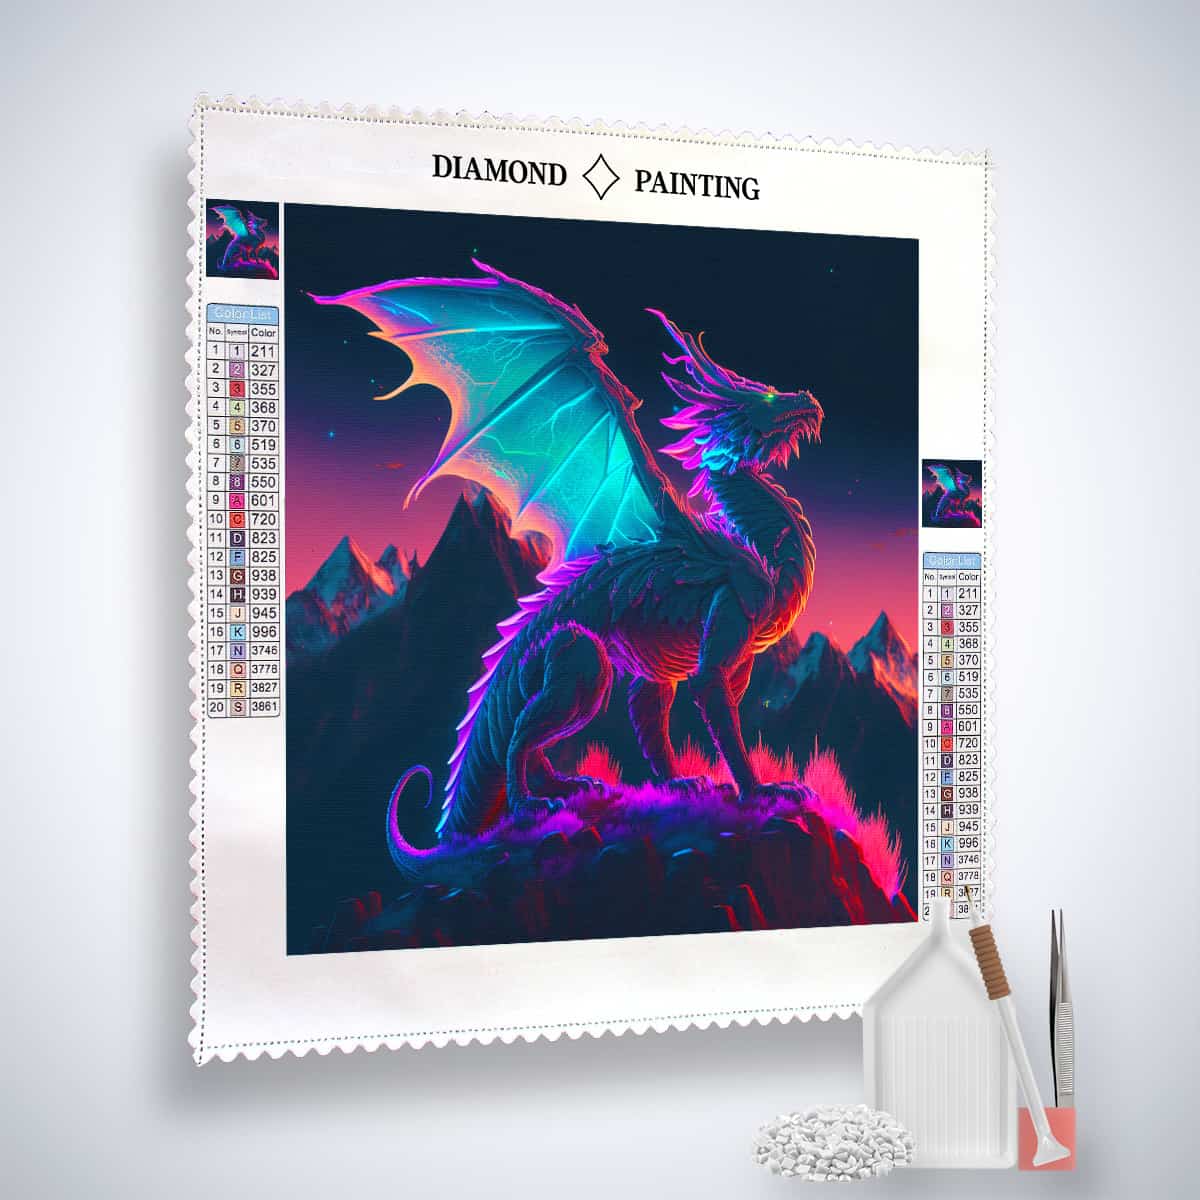 Diamond Painting - Flammenpfad - gedruckt in Ultra-HD - Drachen, Fantasy, Neu eingetroffen, Quadratisch